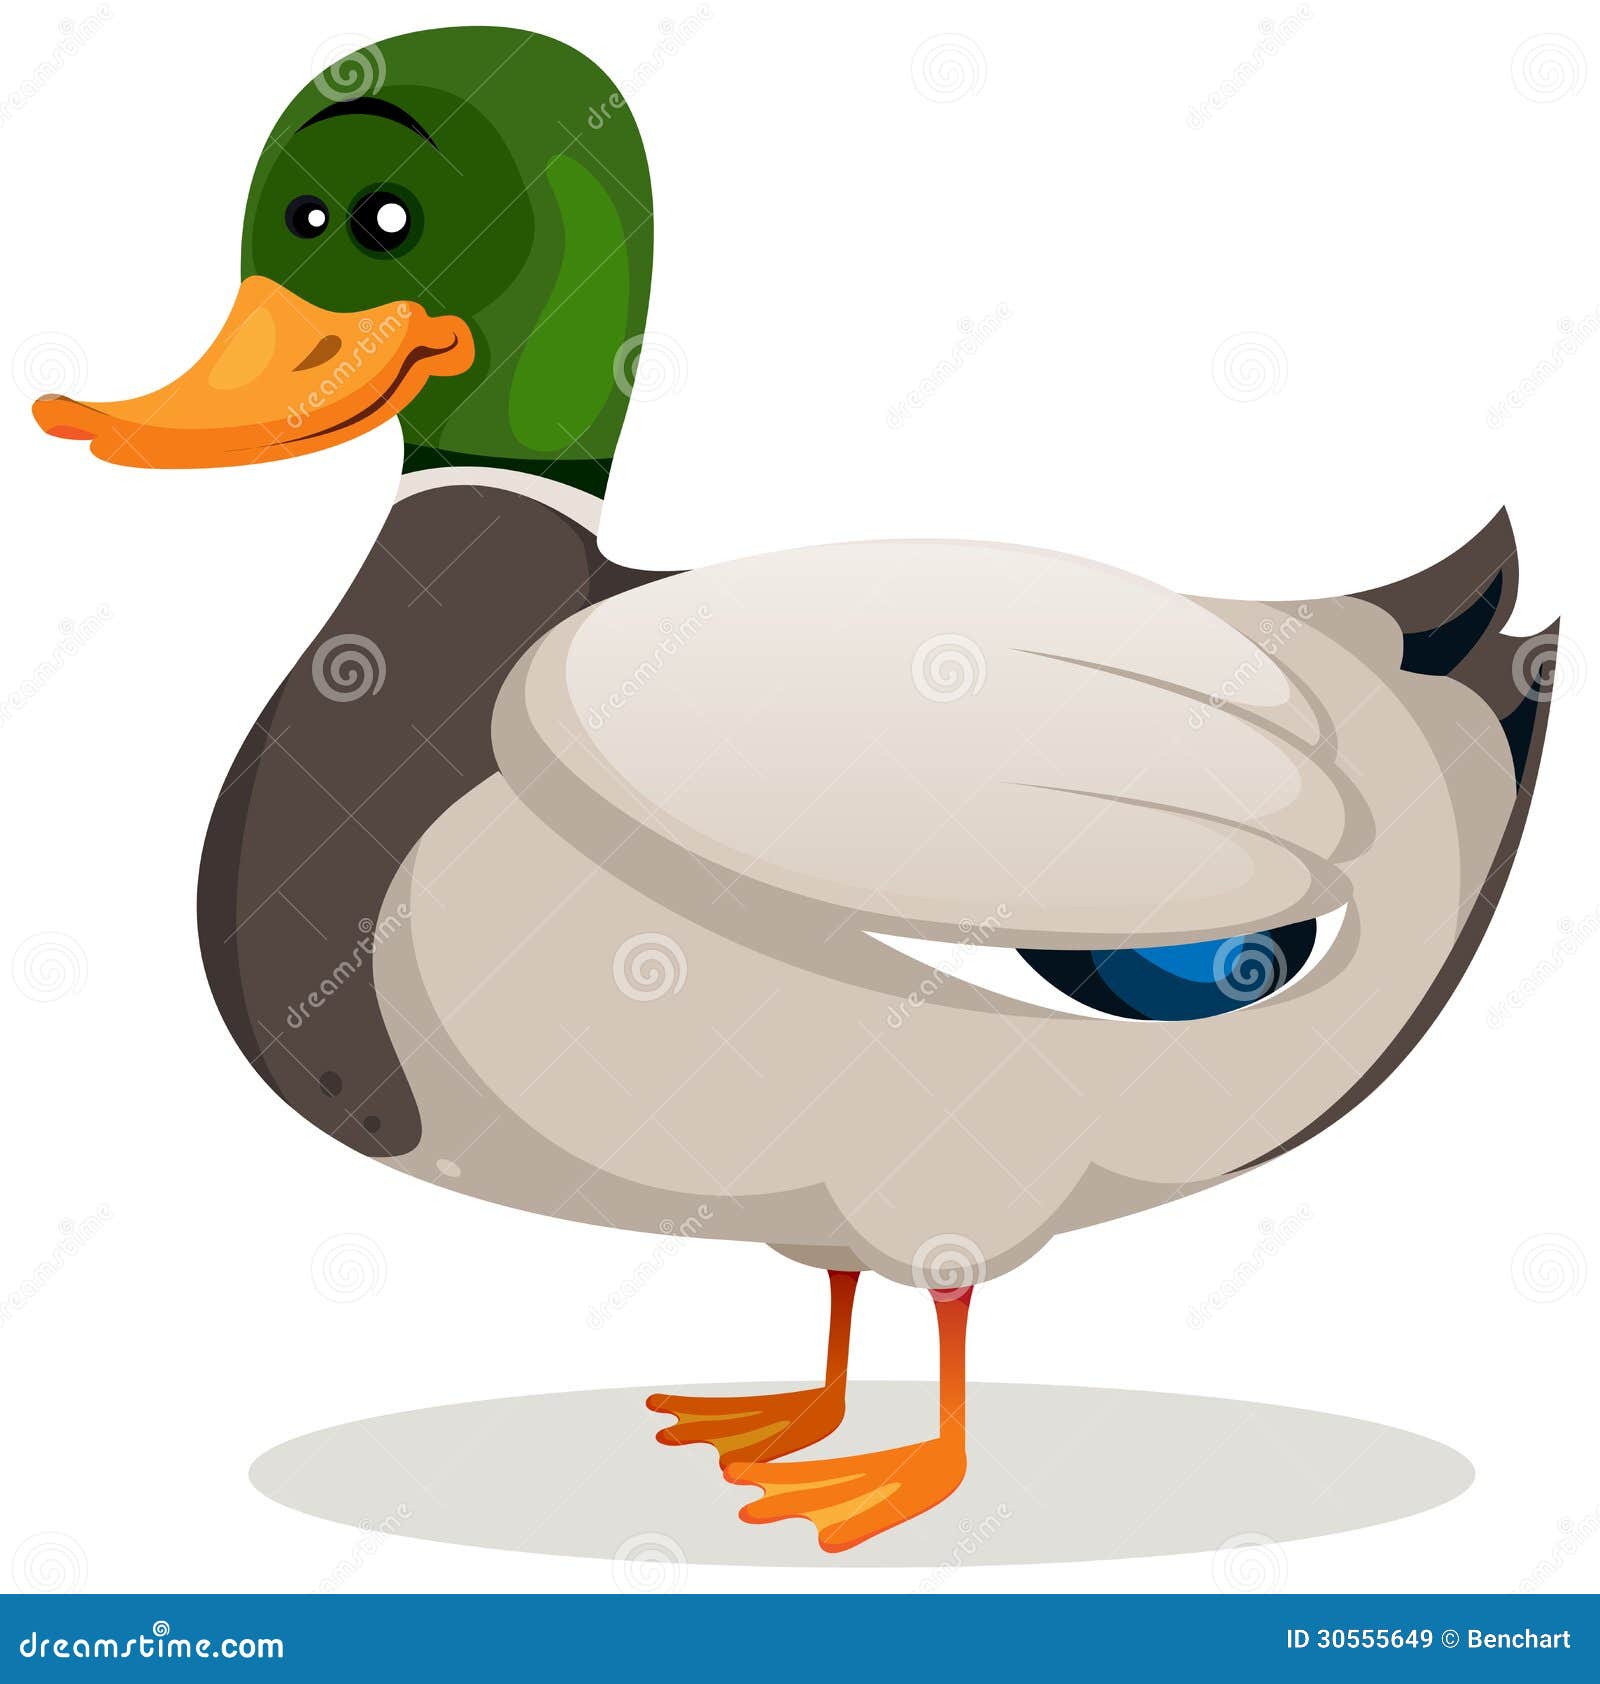 green duck clipart - photo #30